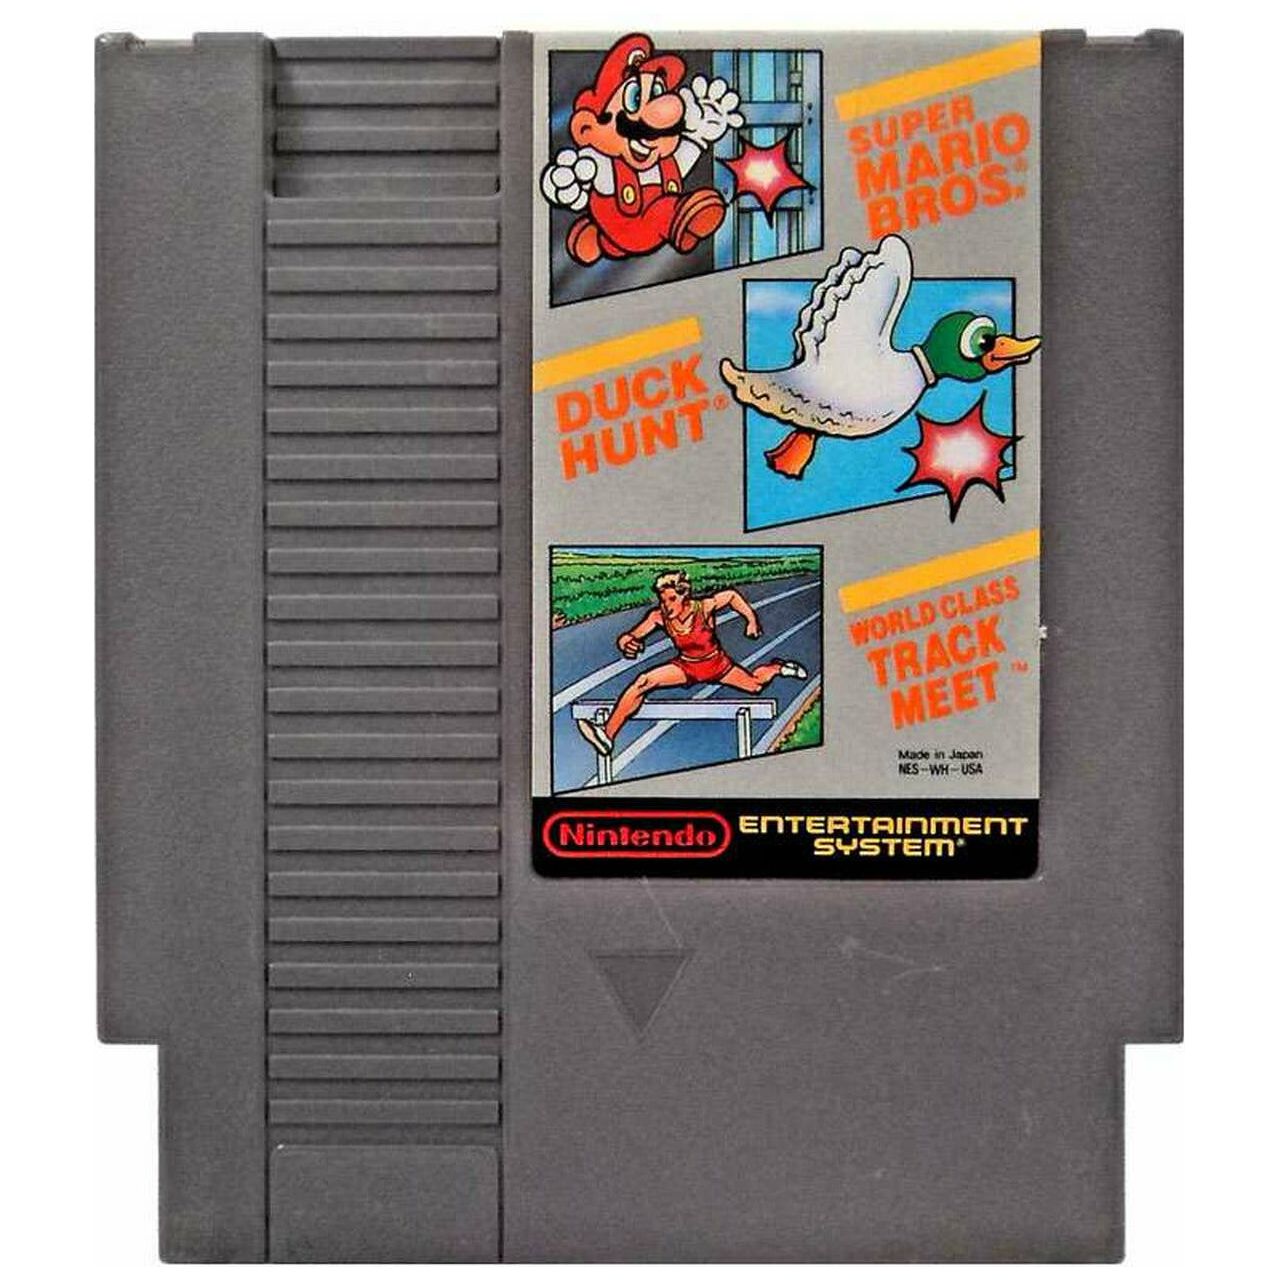 NES - Super Mario Bros + World Class Track Meet + Duck Hunt (Cartridge Only)